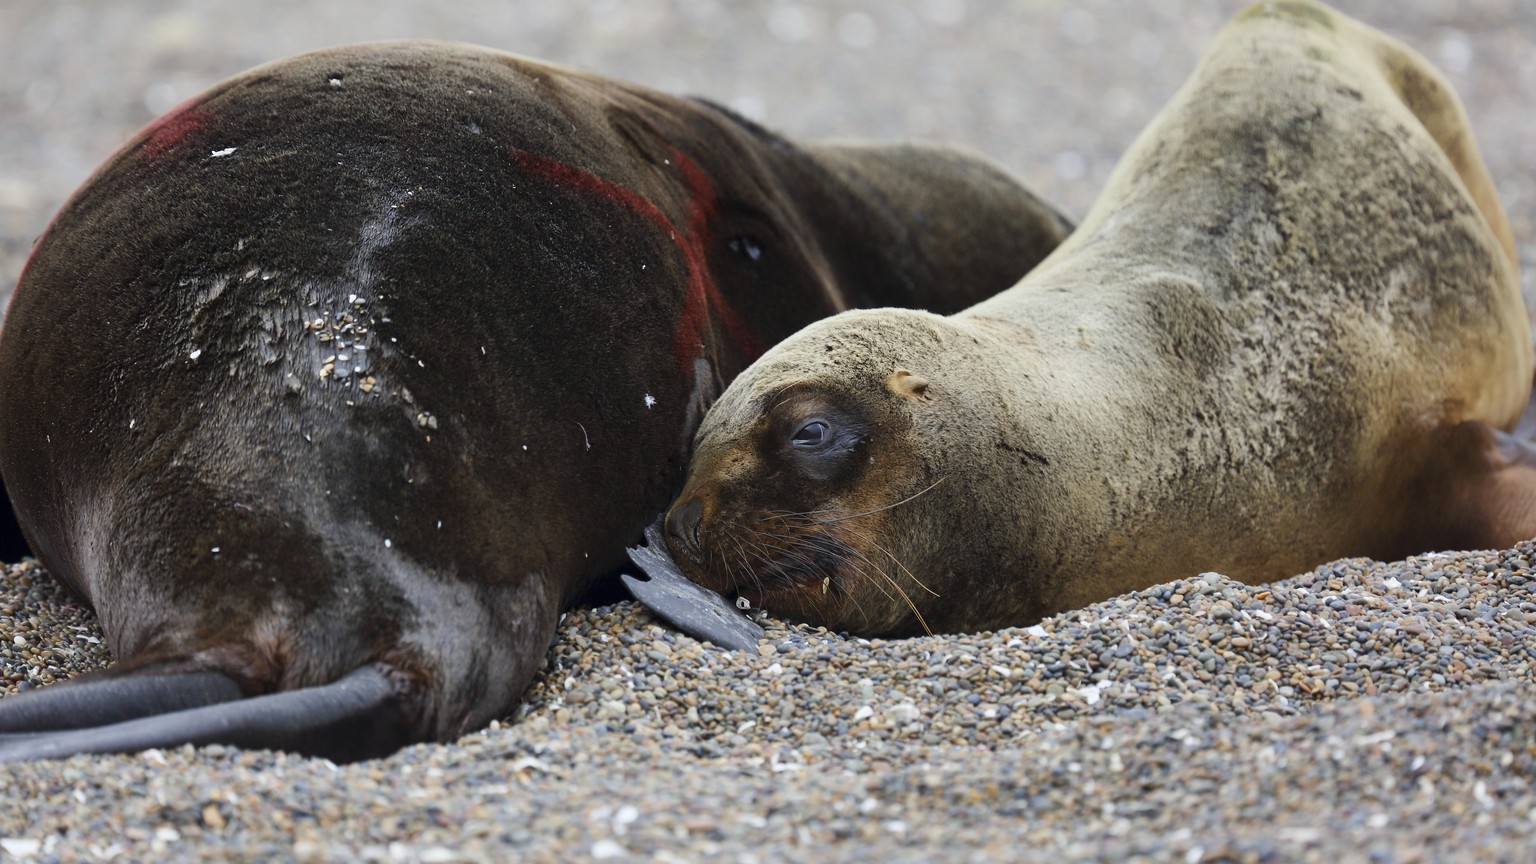 A sea lion lays beside another dead sea lion at an Atlantic Patagonian beach near Viedma, R